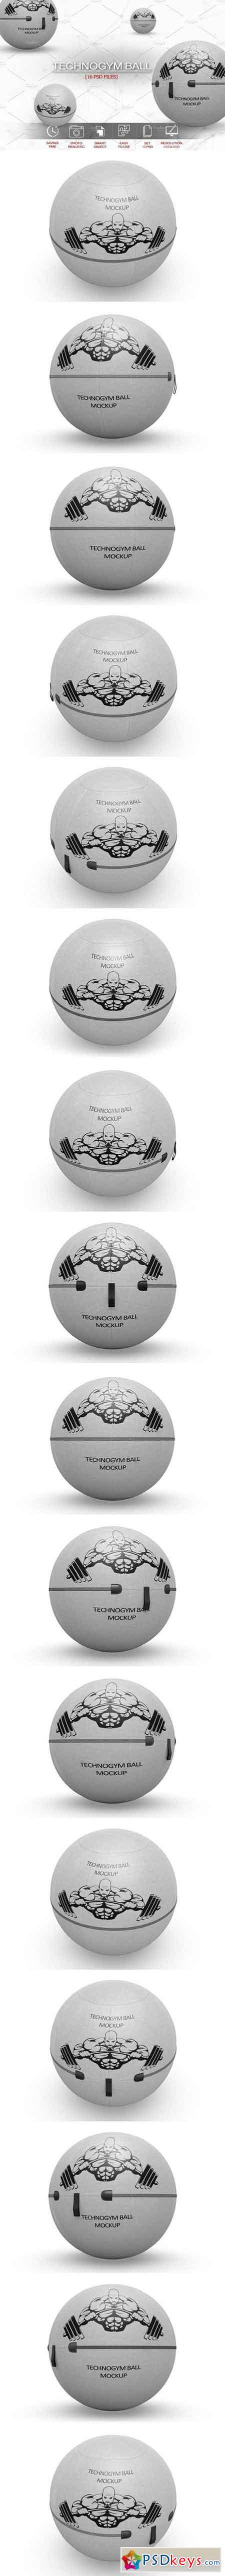 Technogym Ball MockUp 2108331